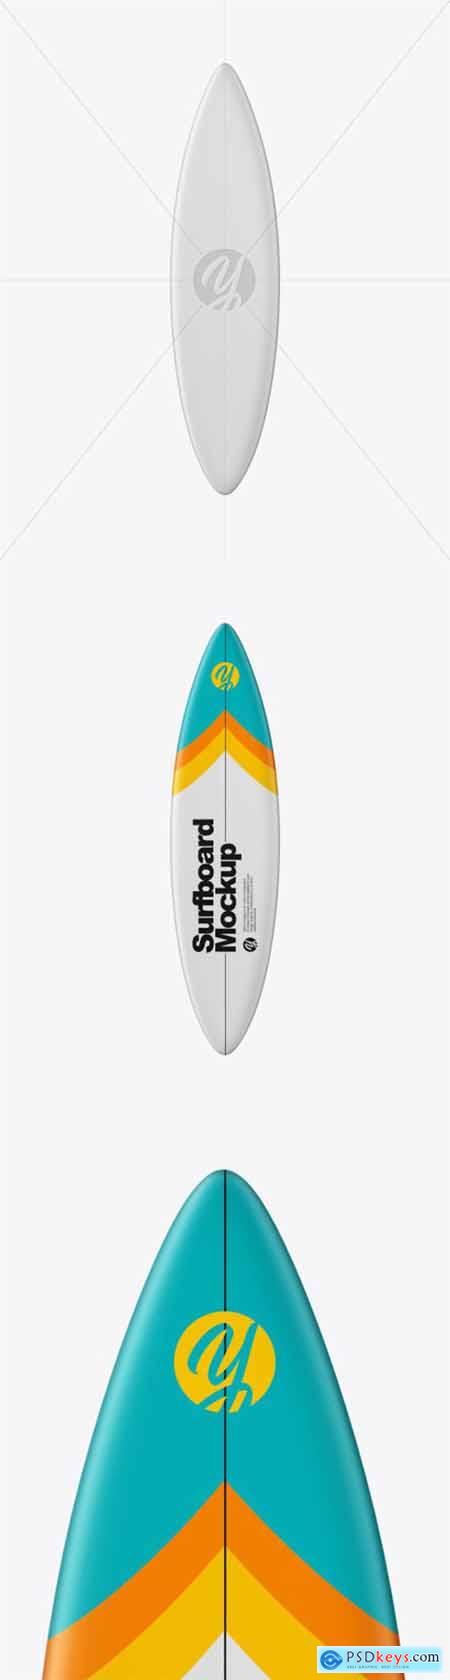 Download Surfboard Mockup - Front View 51856 » Free Download Photoshop Vector Stock image Via Torrent ...